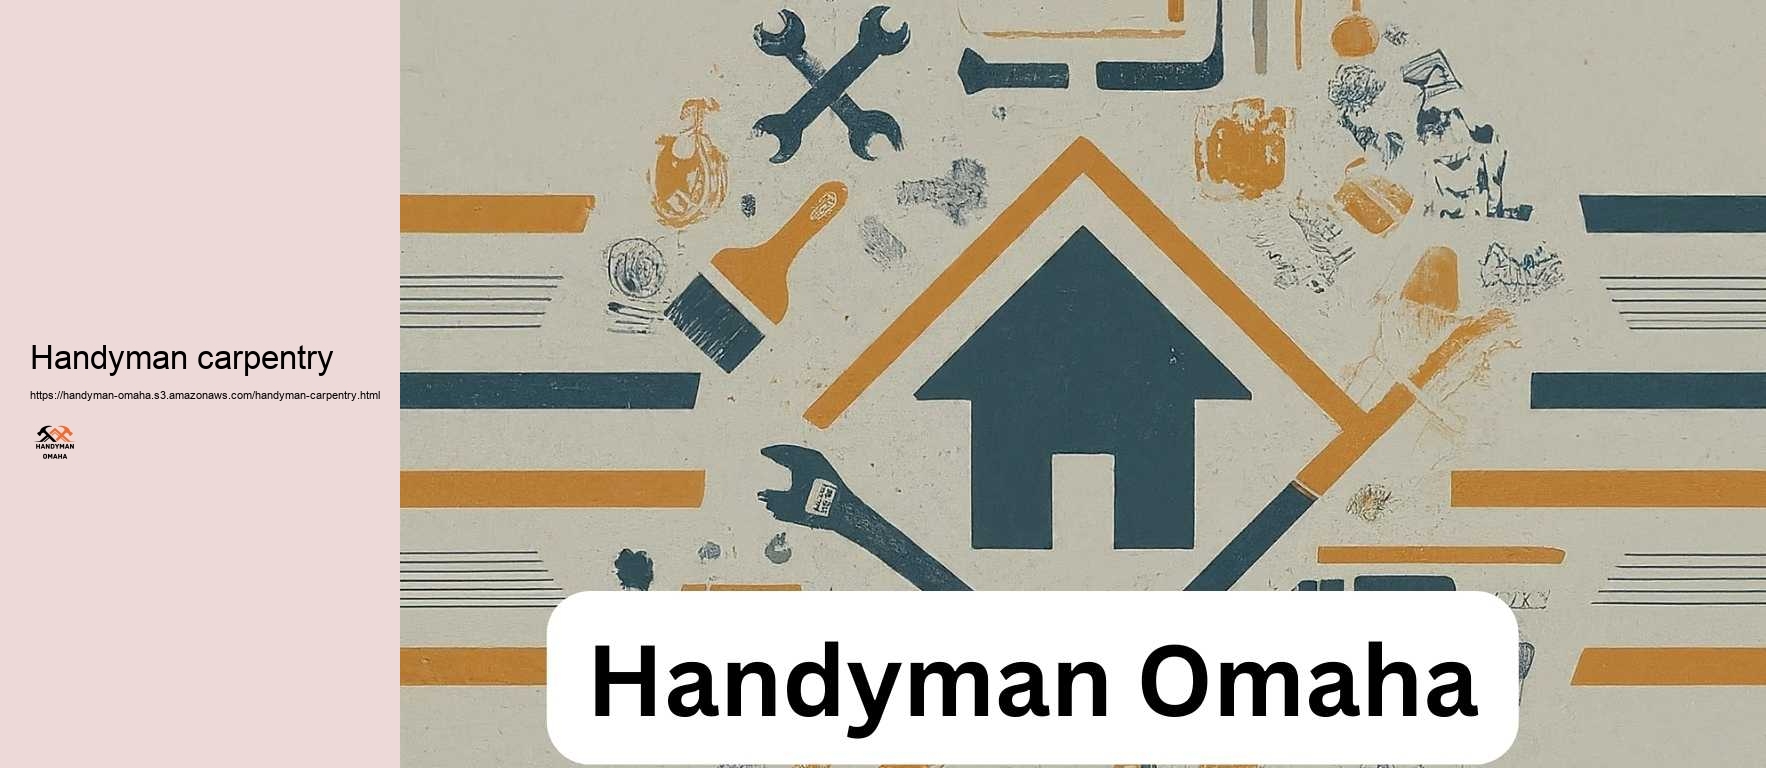 Handyman carpentry